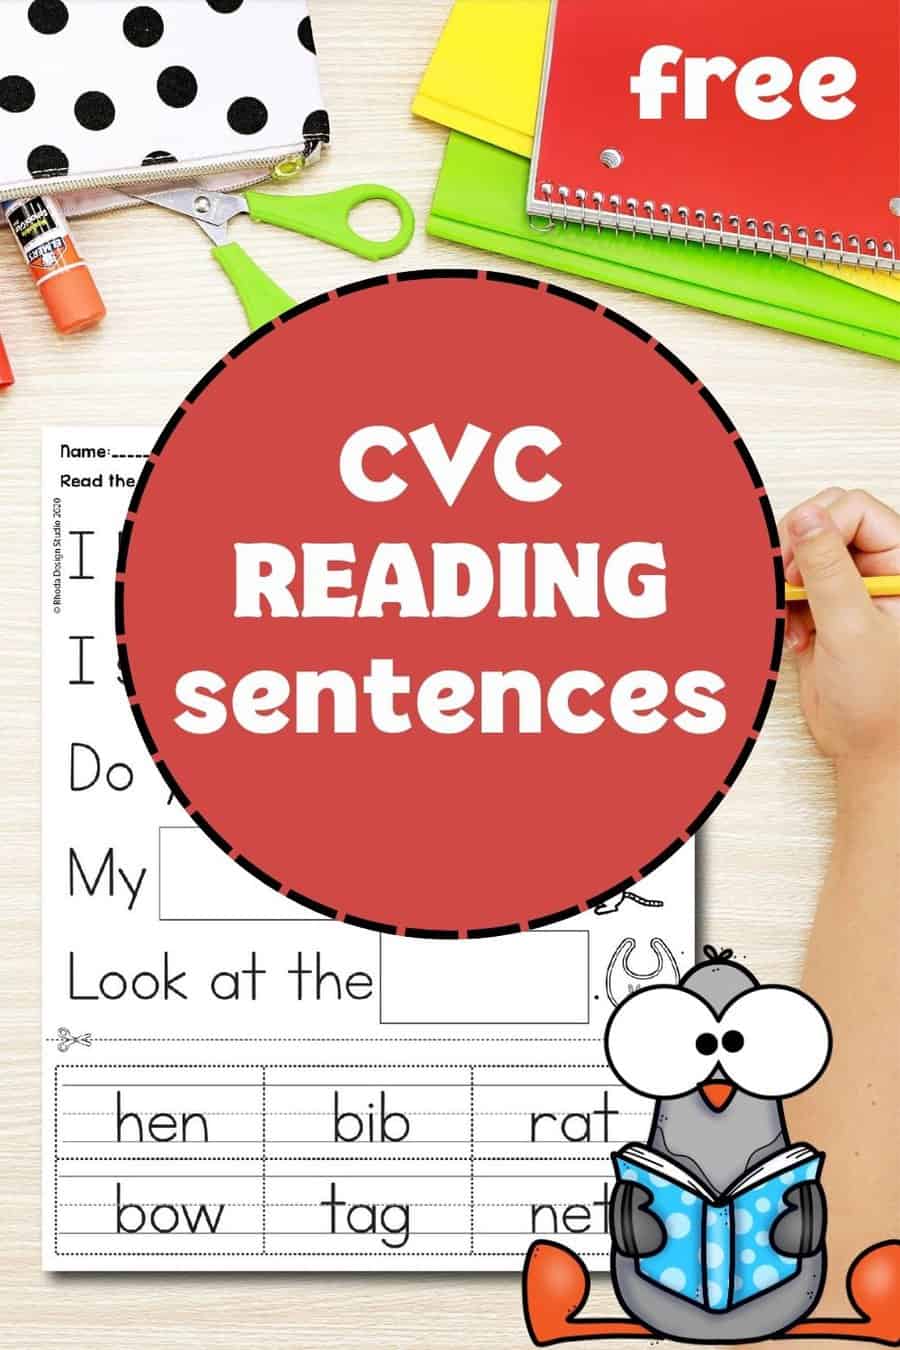 I Can Read CVC Sentences: 10 Free Reading Worksheets